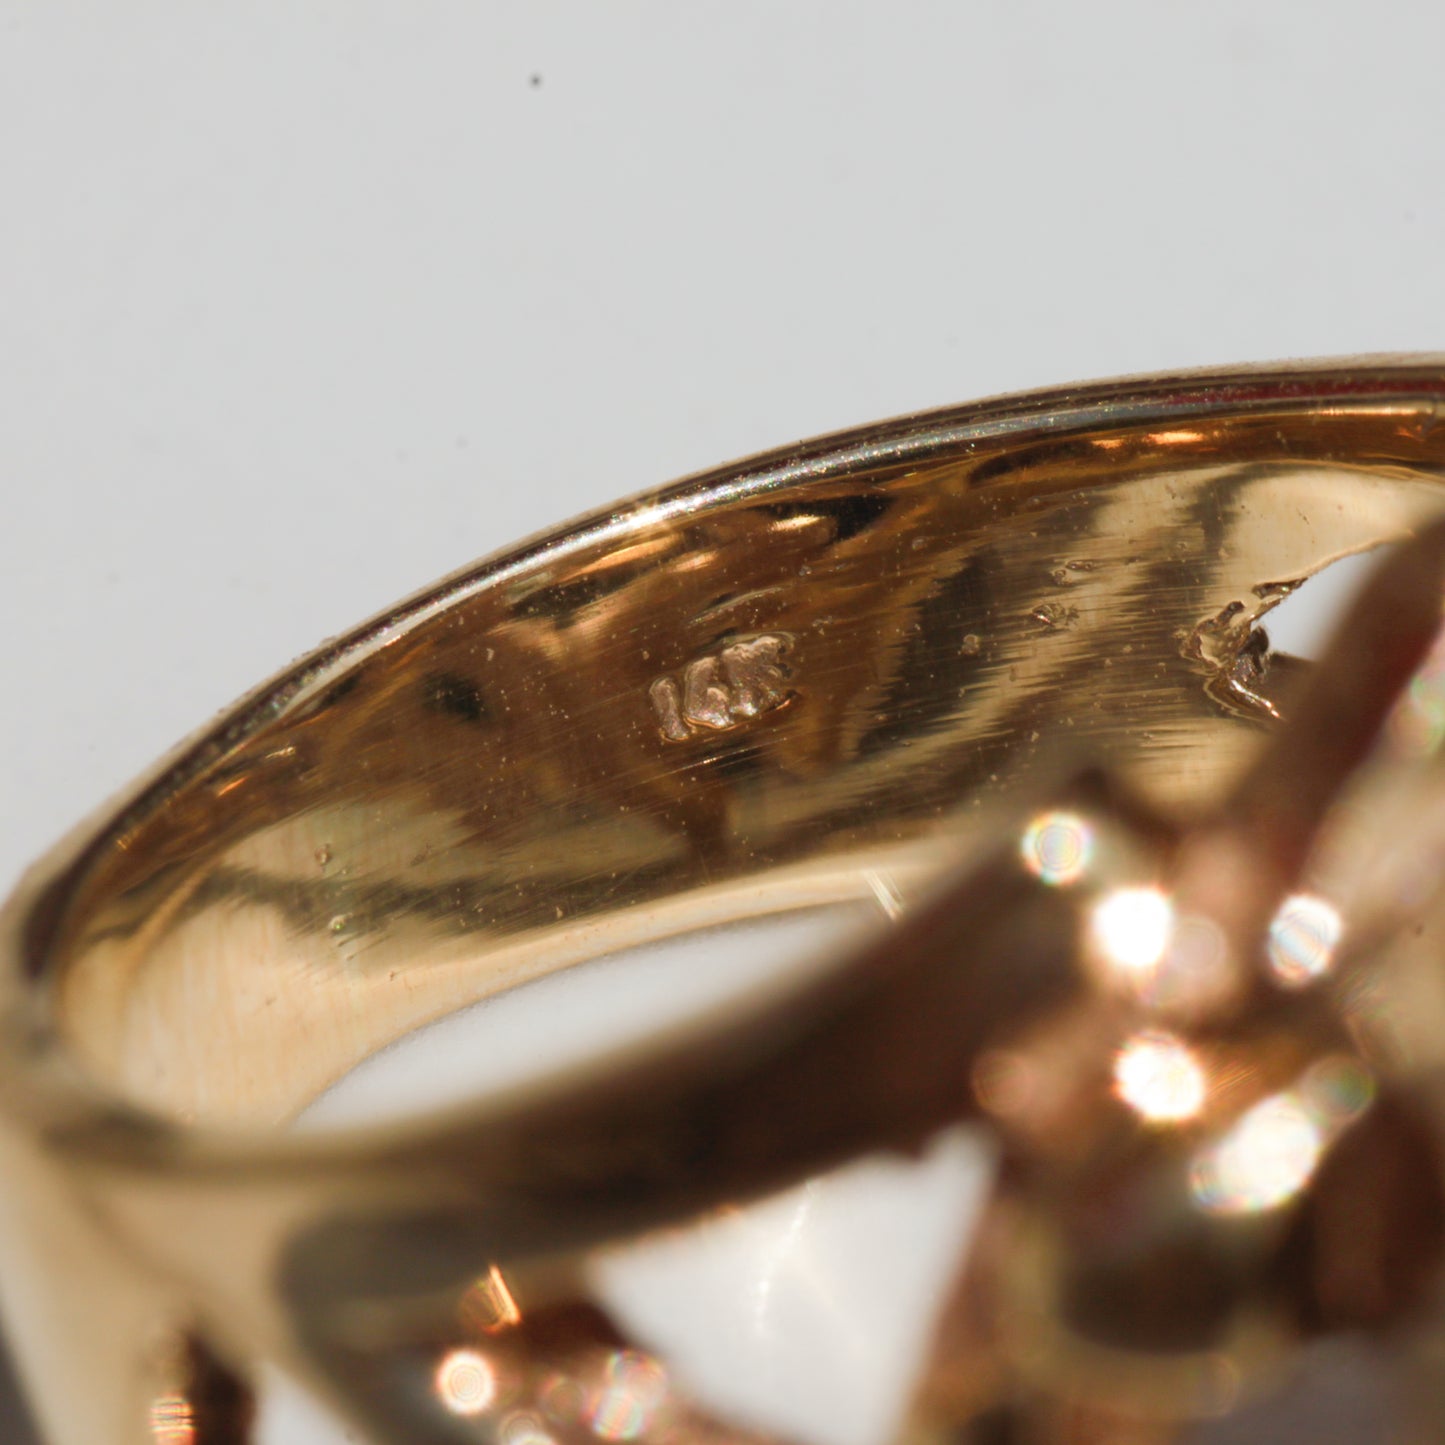 Vintage Mid-Century Emerald Cut Diamond Modernist Ring 14k Gold Sz 6